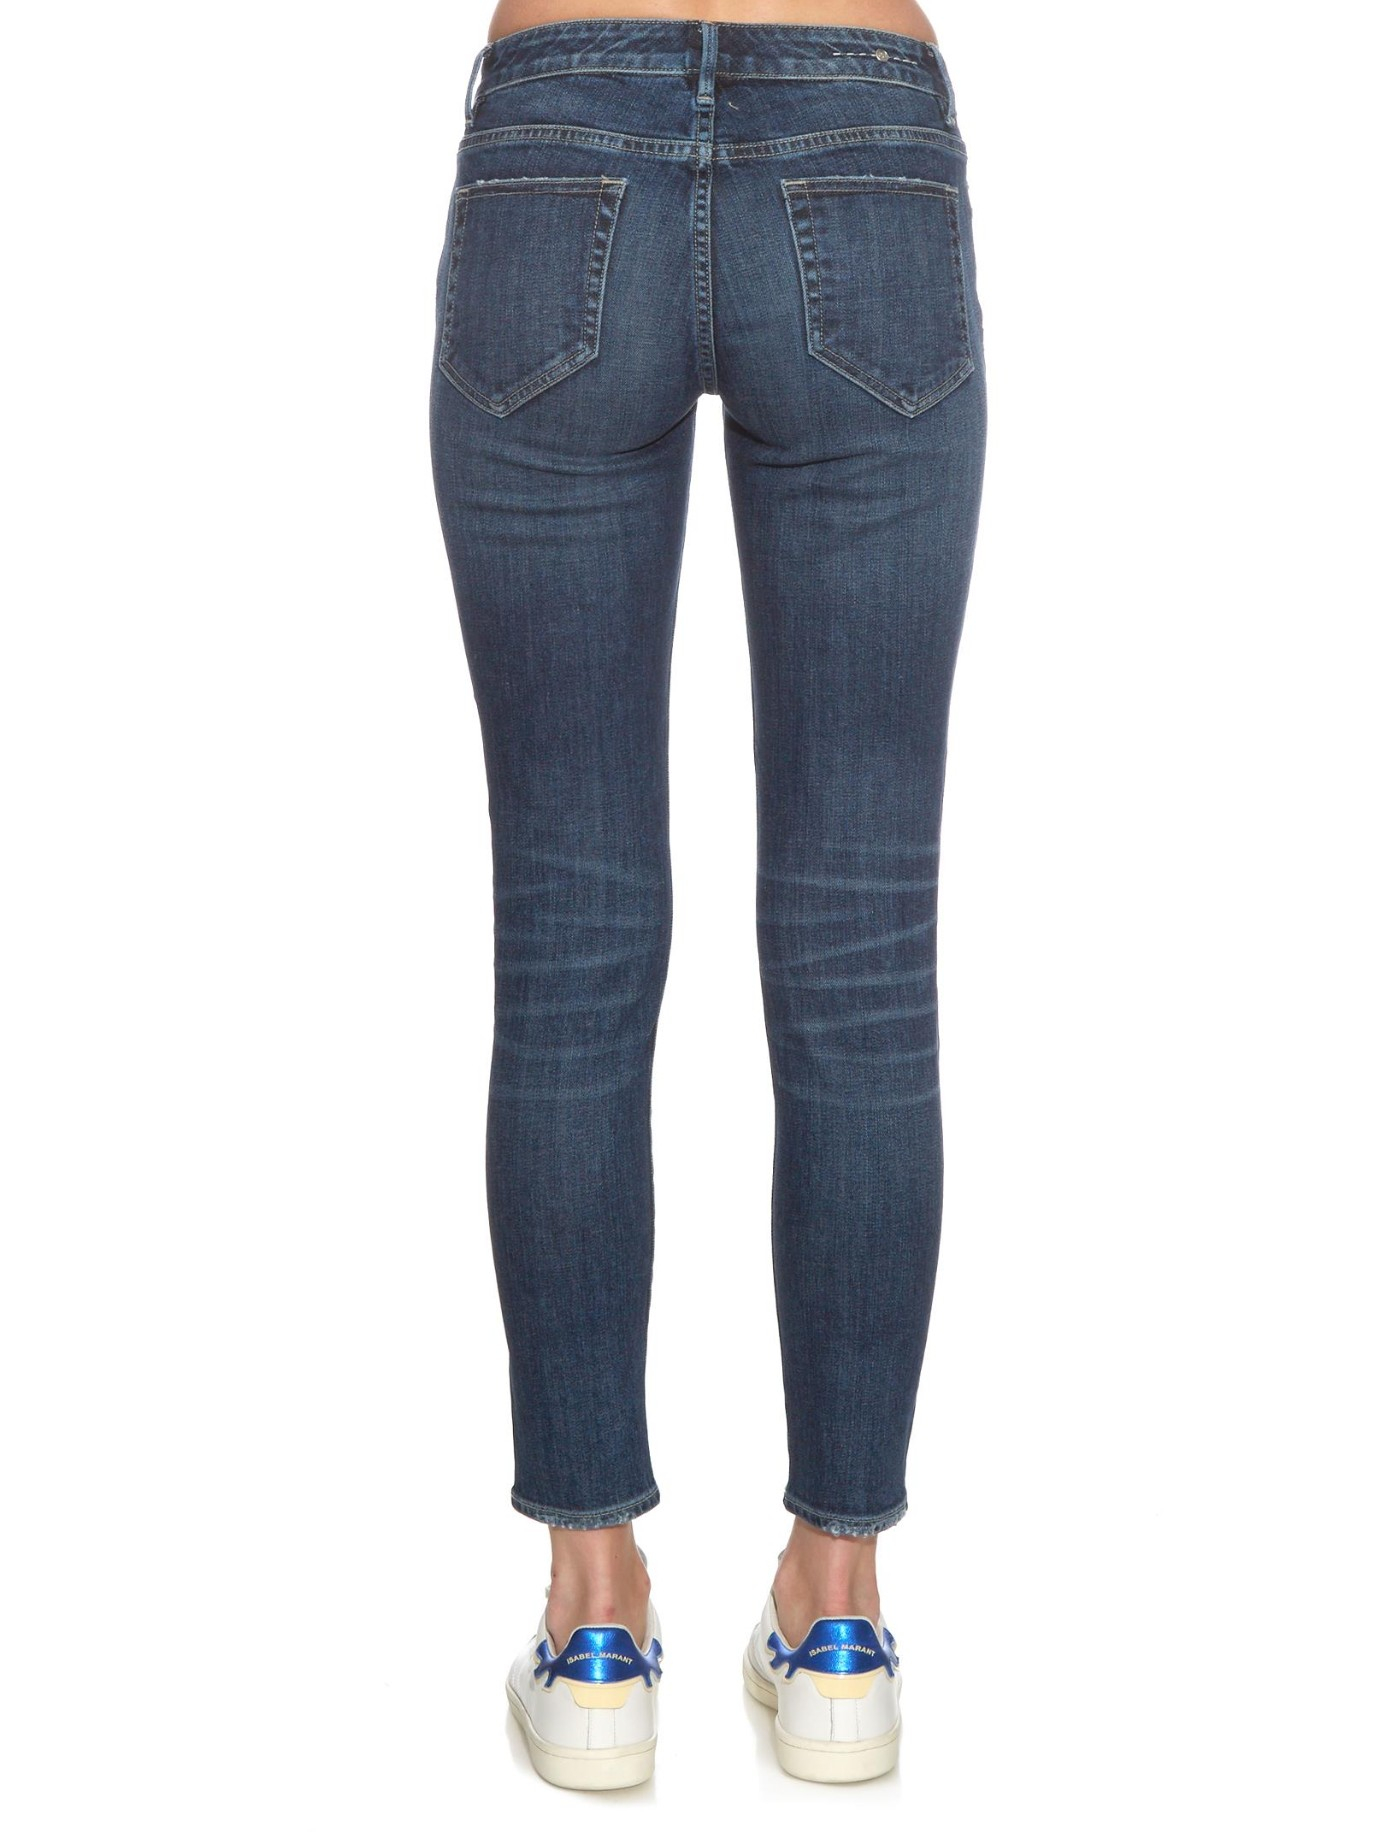 Earnest Sewn Jane Mid-rise Skinny Jeans in Blue - Lyst